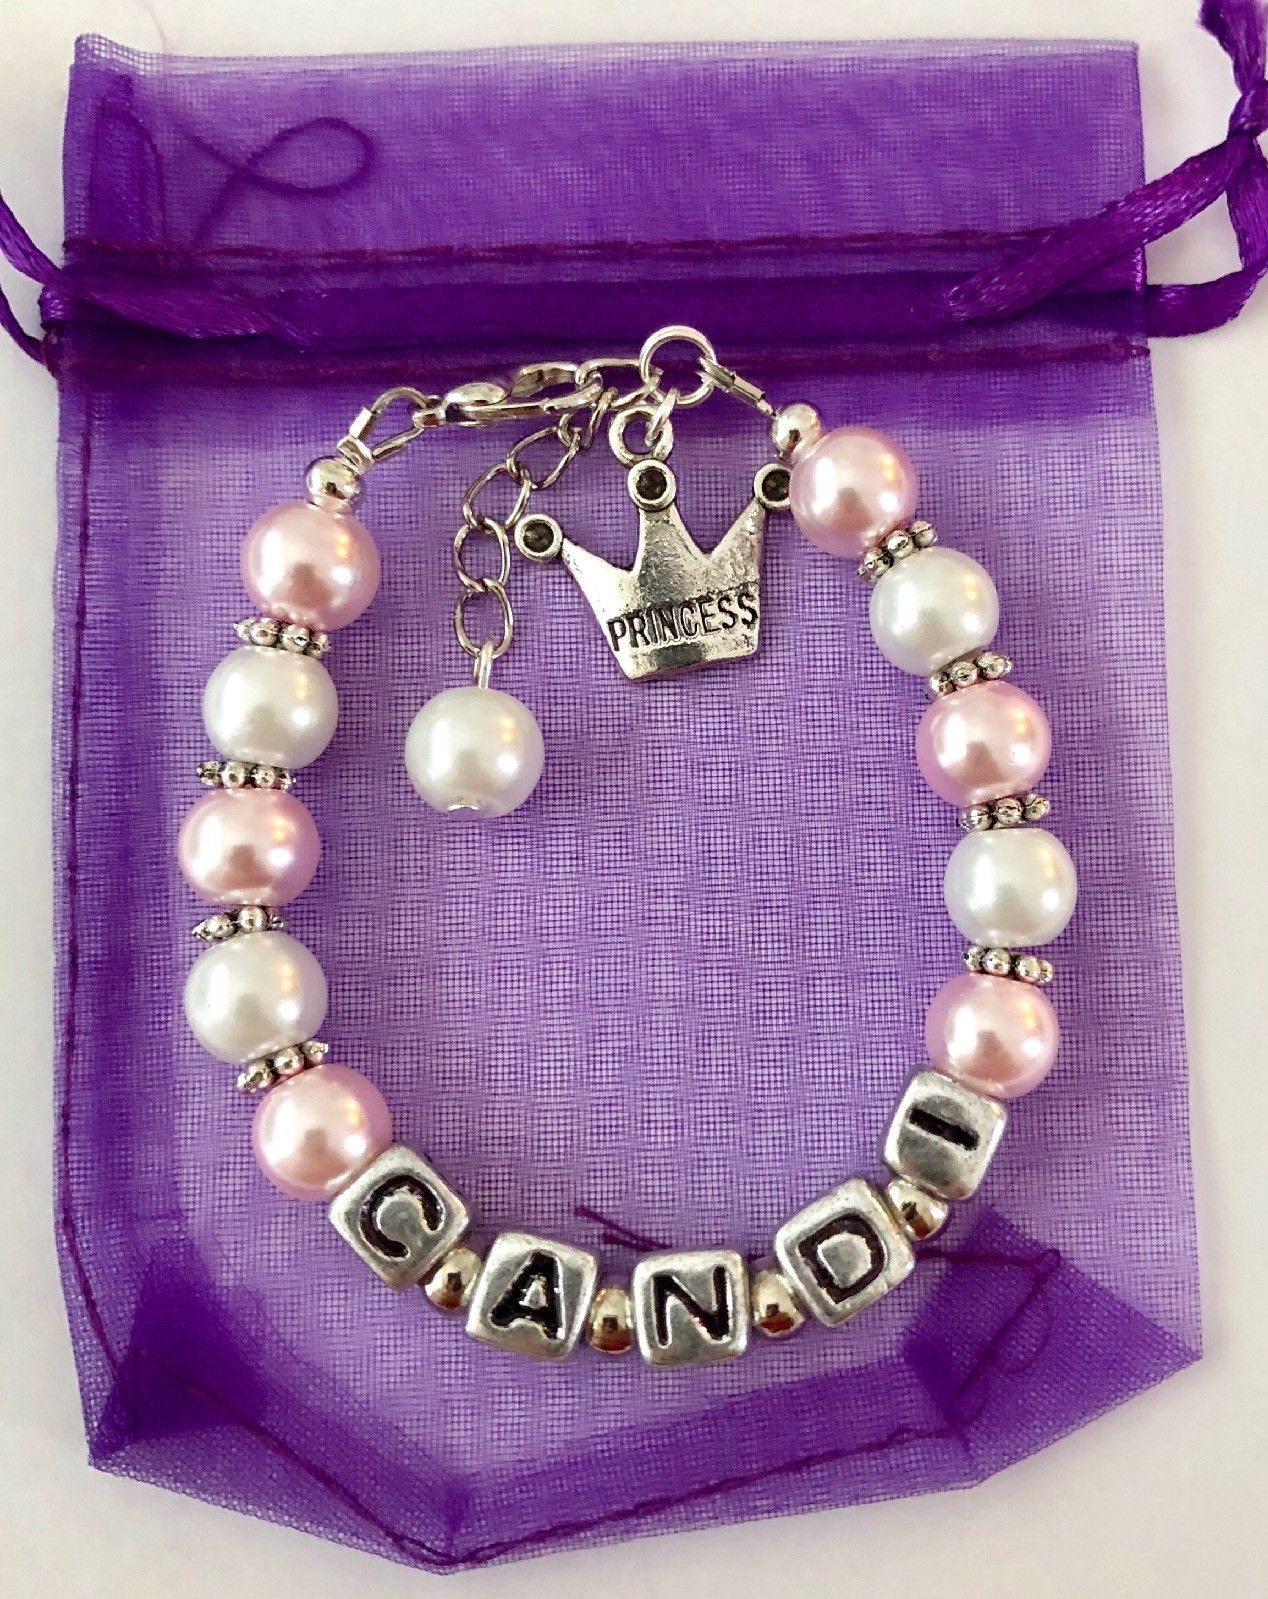 Personalized Princess Charm Girl's Bracelet - Charming Diva Boutique